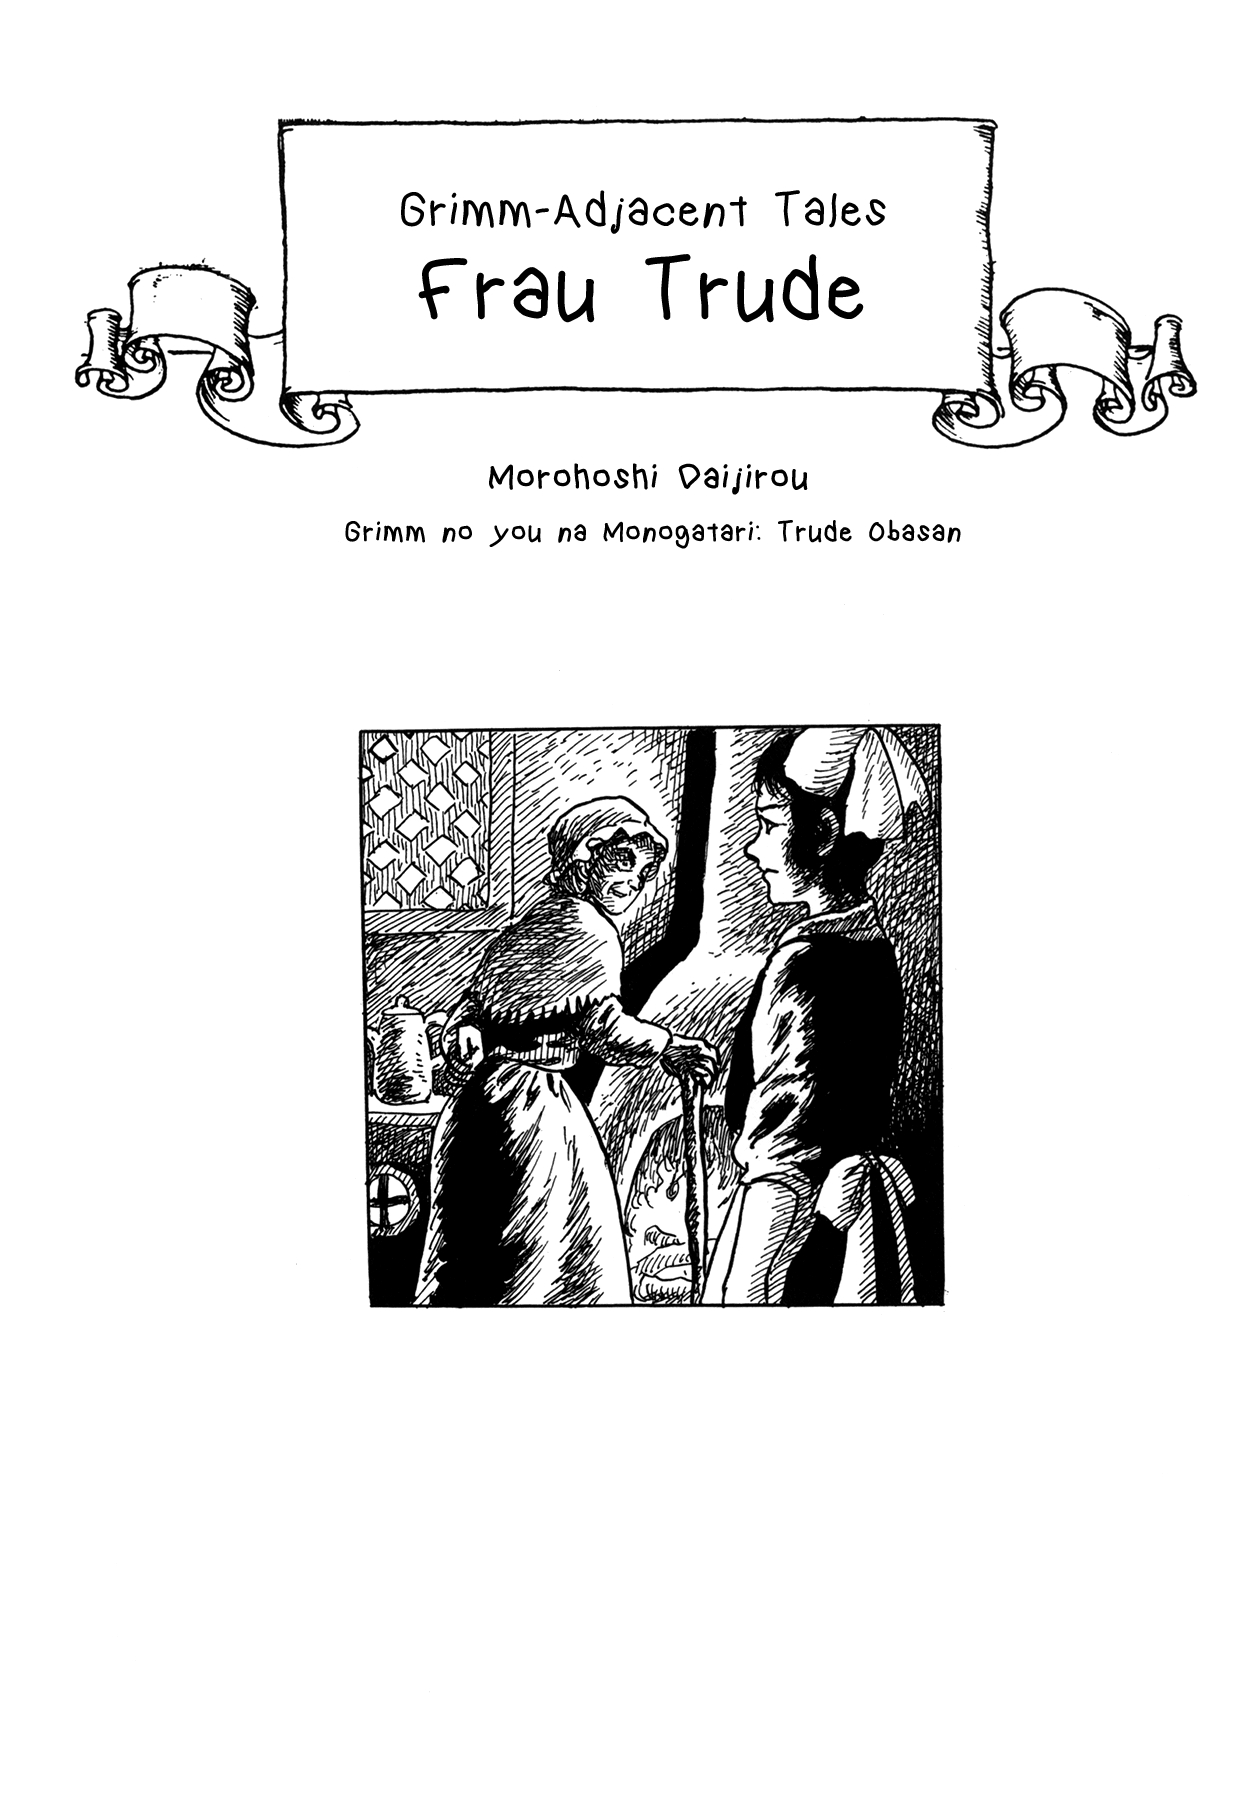 Frau Trude – Grimm Adjacent Tales Vol. 1 Ch. 1 G’s Dairy